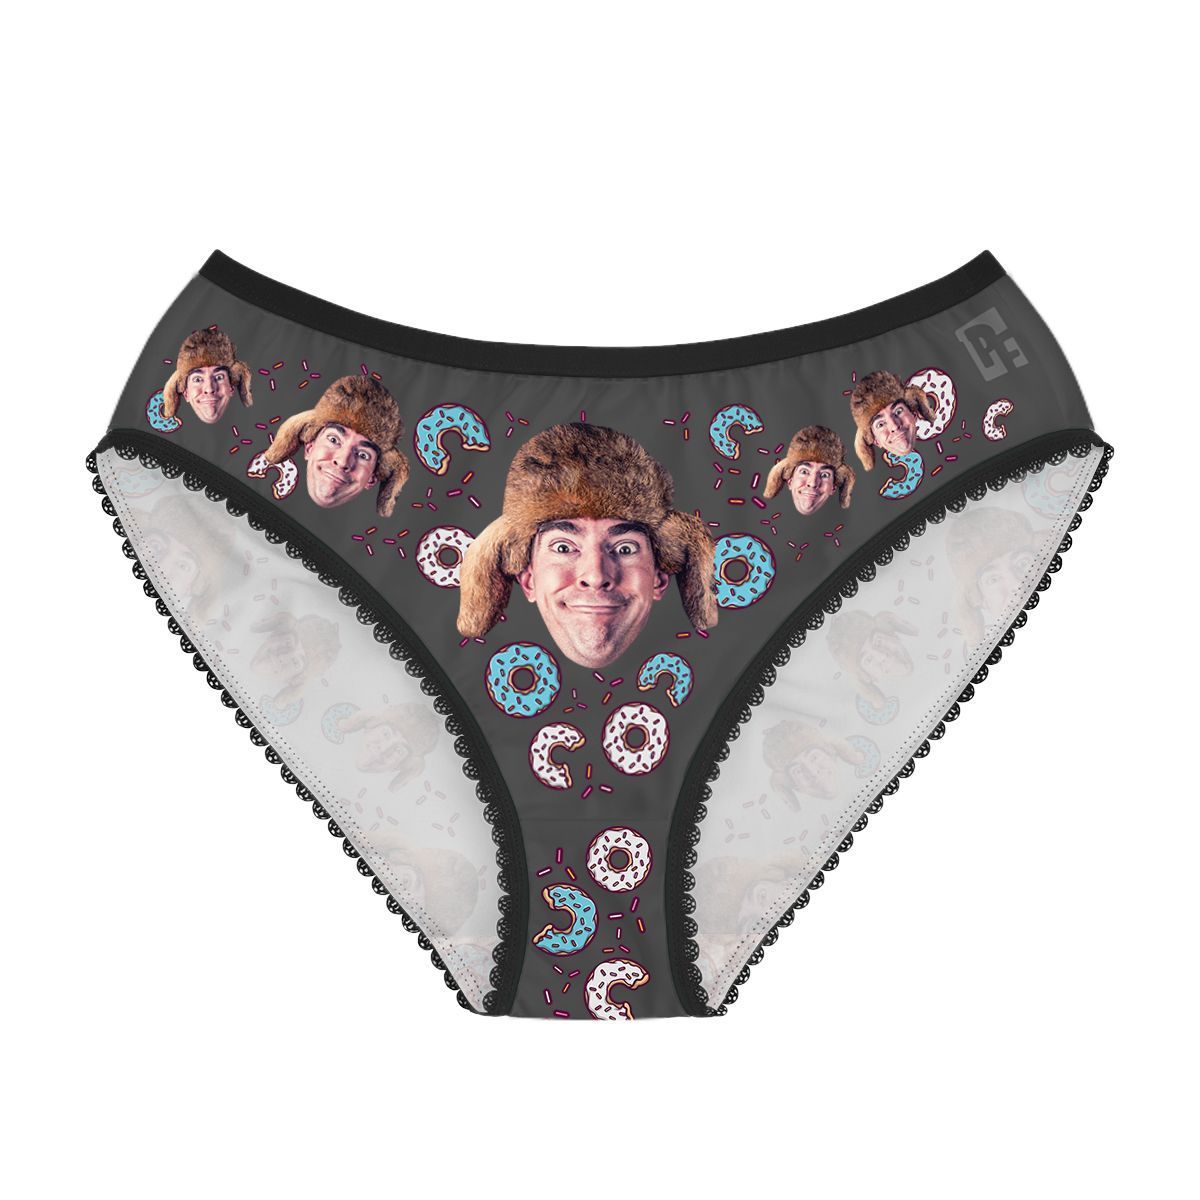 Dark Donuts women's underwear briefs personalized with photo printed on them